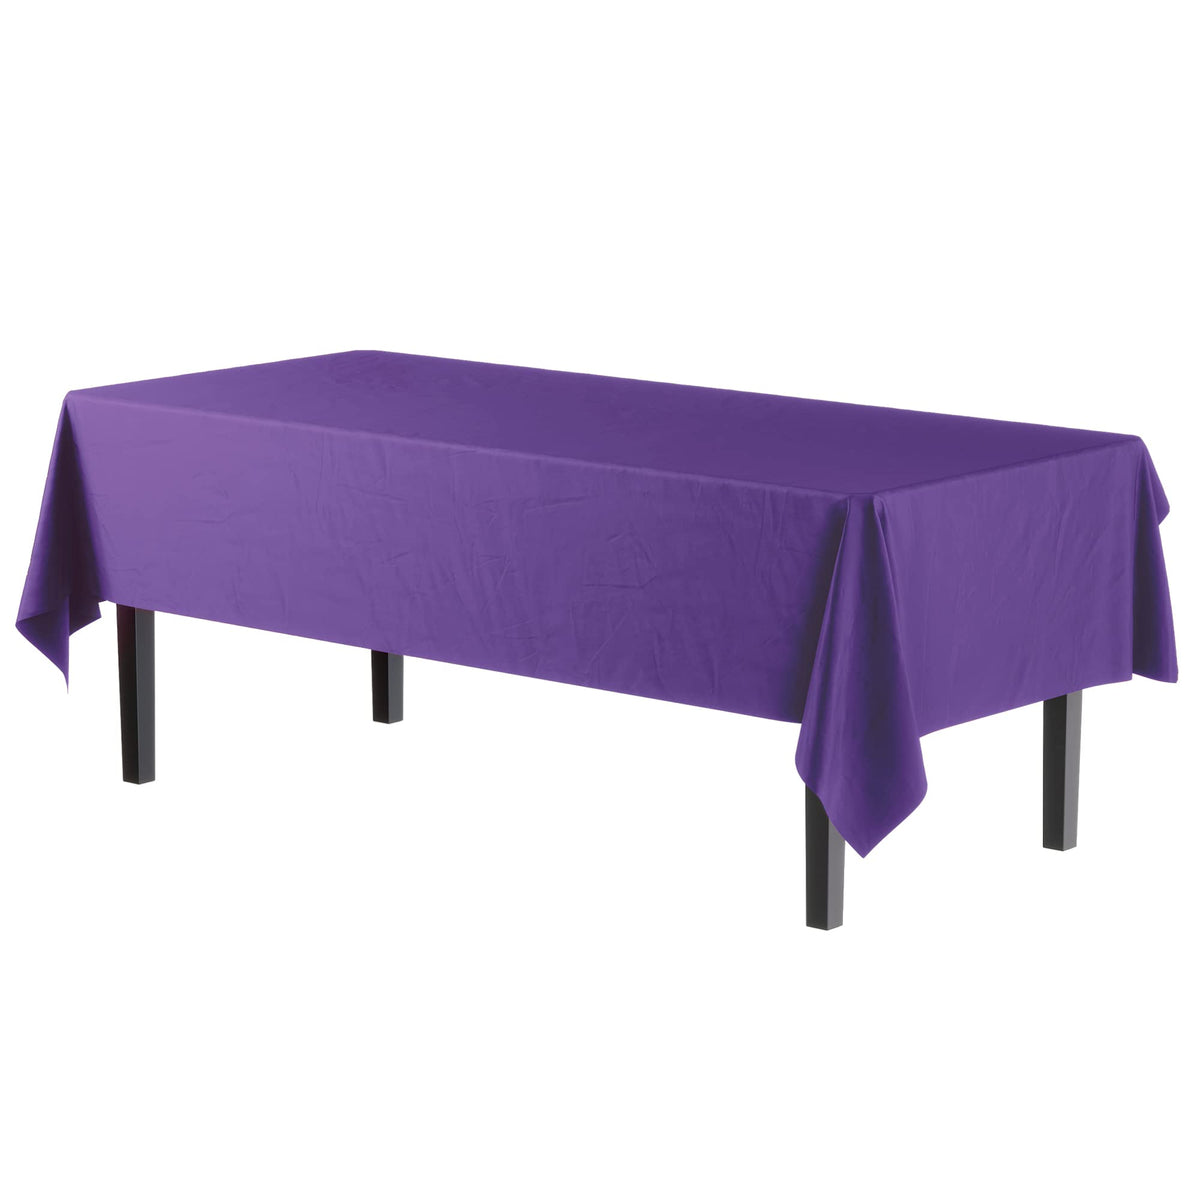 Purple plastic Table Cover